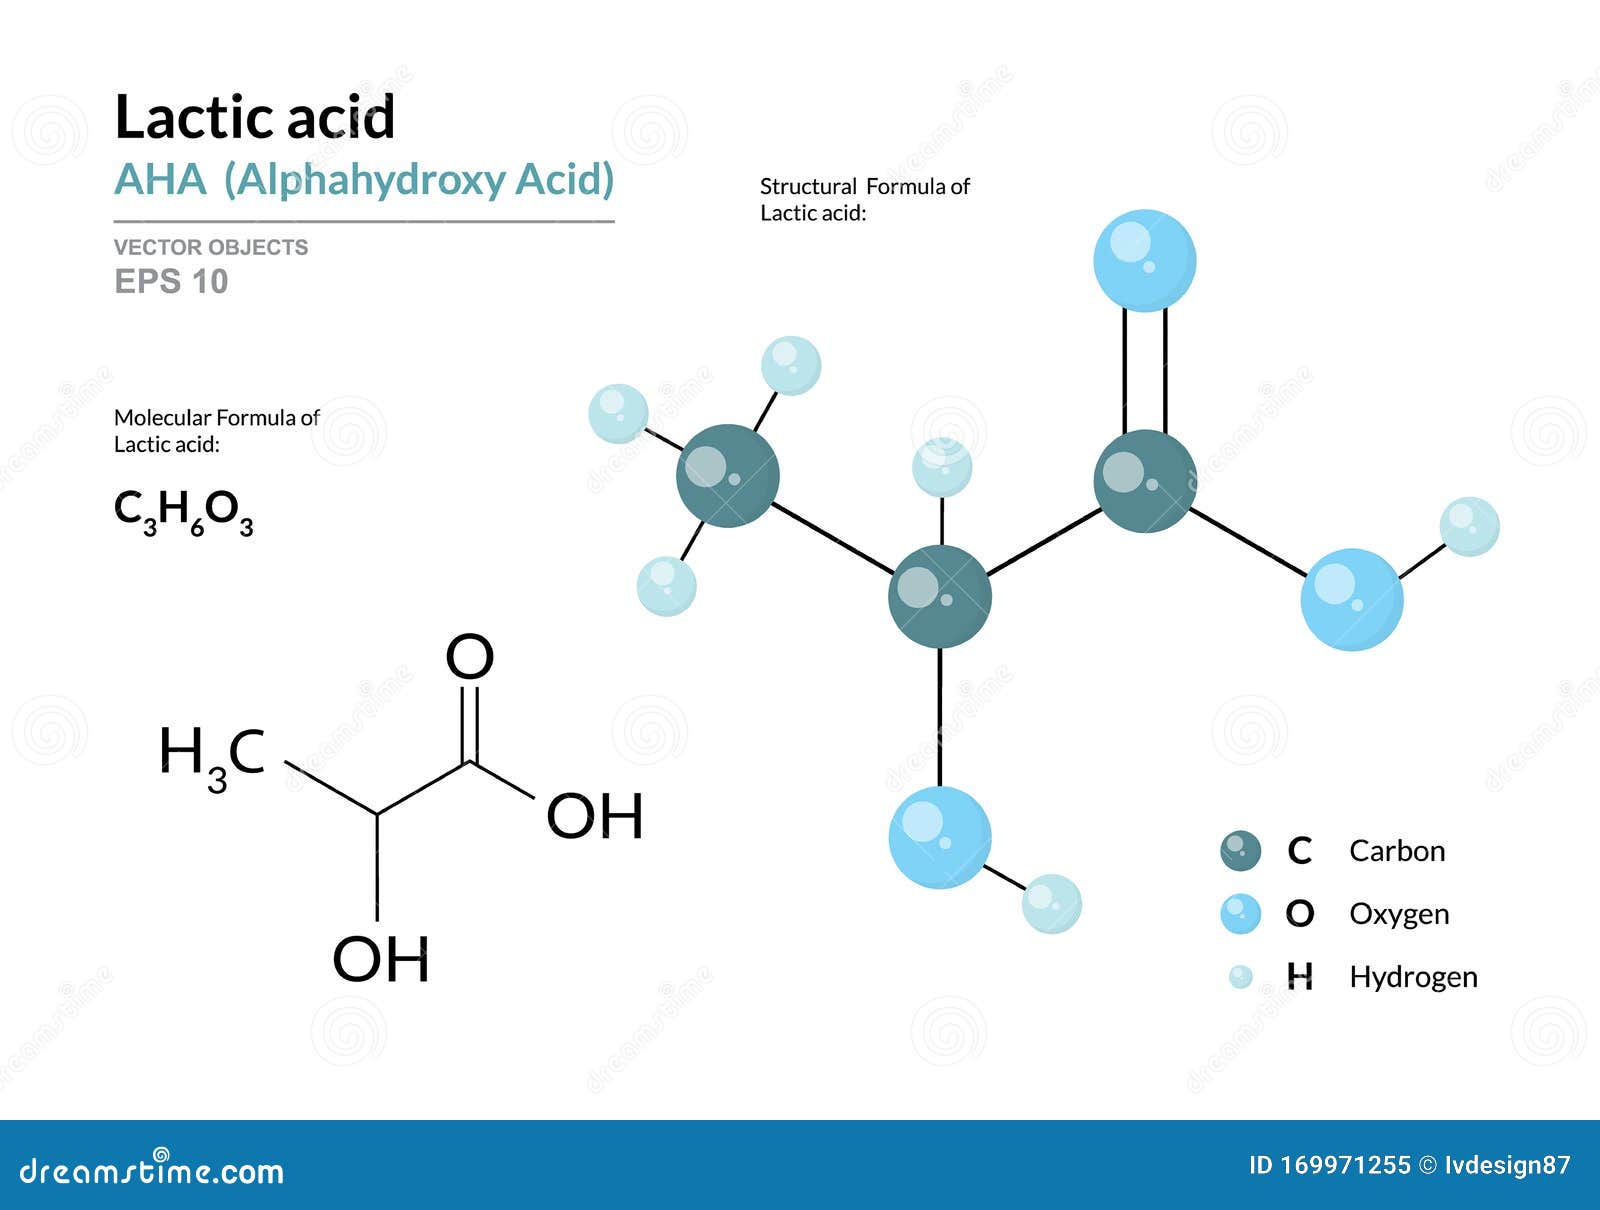 lactic acid. aha alphahydroxy acid. structural chemical formula and molecule 3d model. atoms with color coding. 